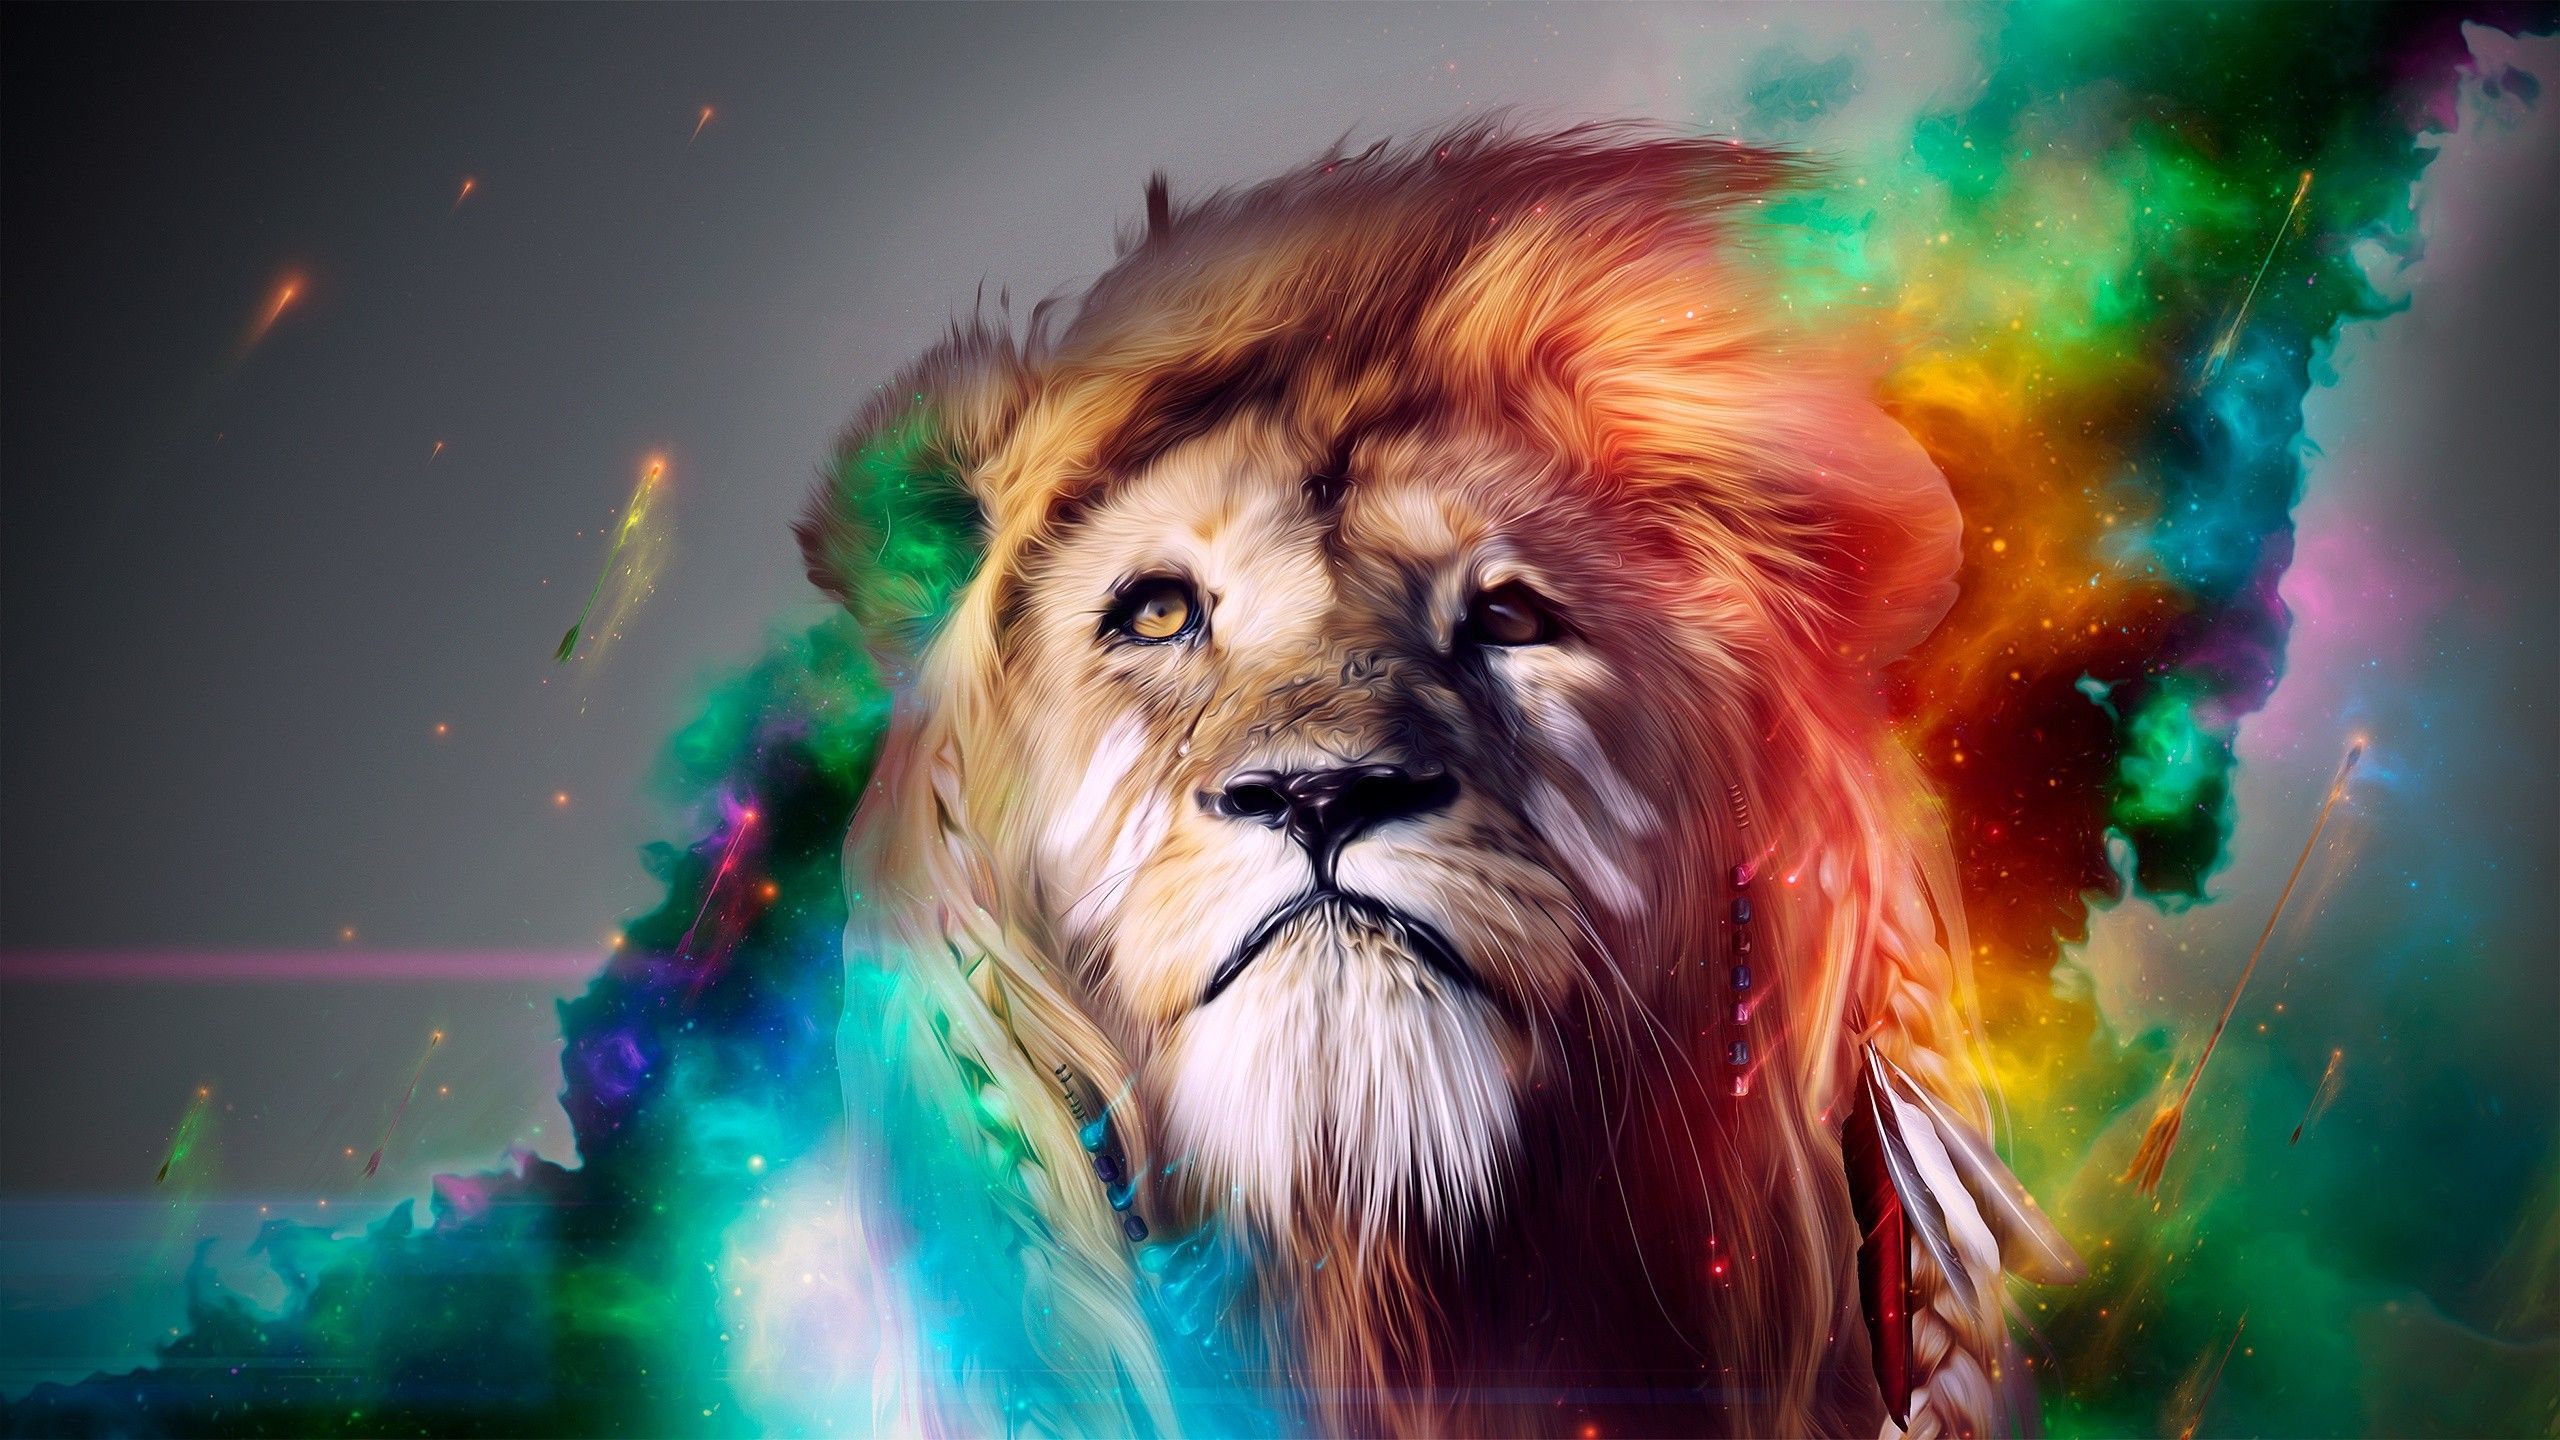 cool lion wallpaper #21